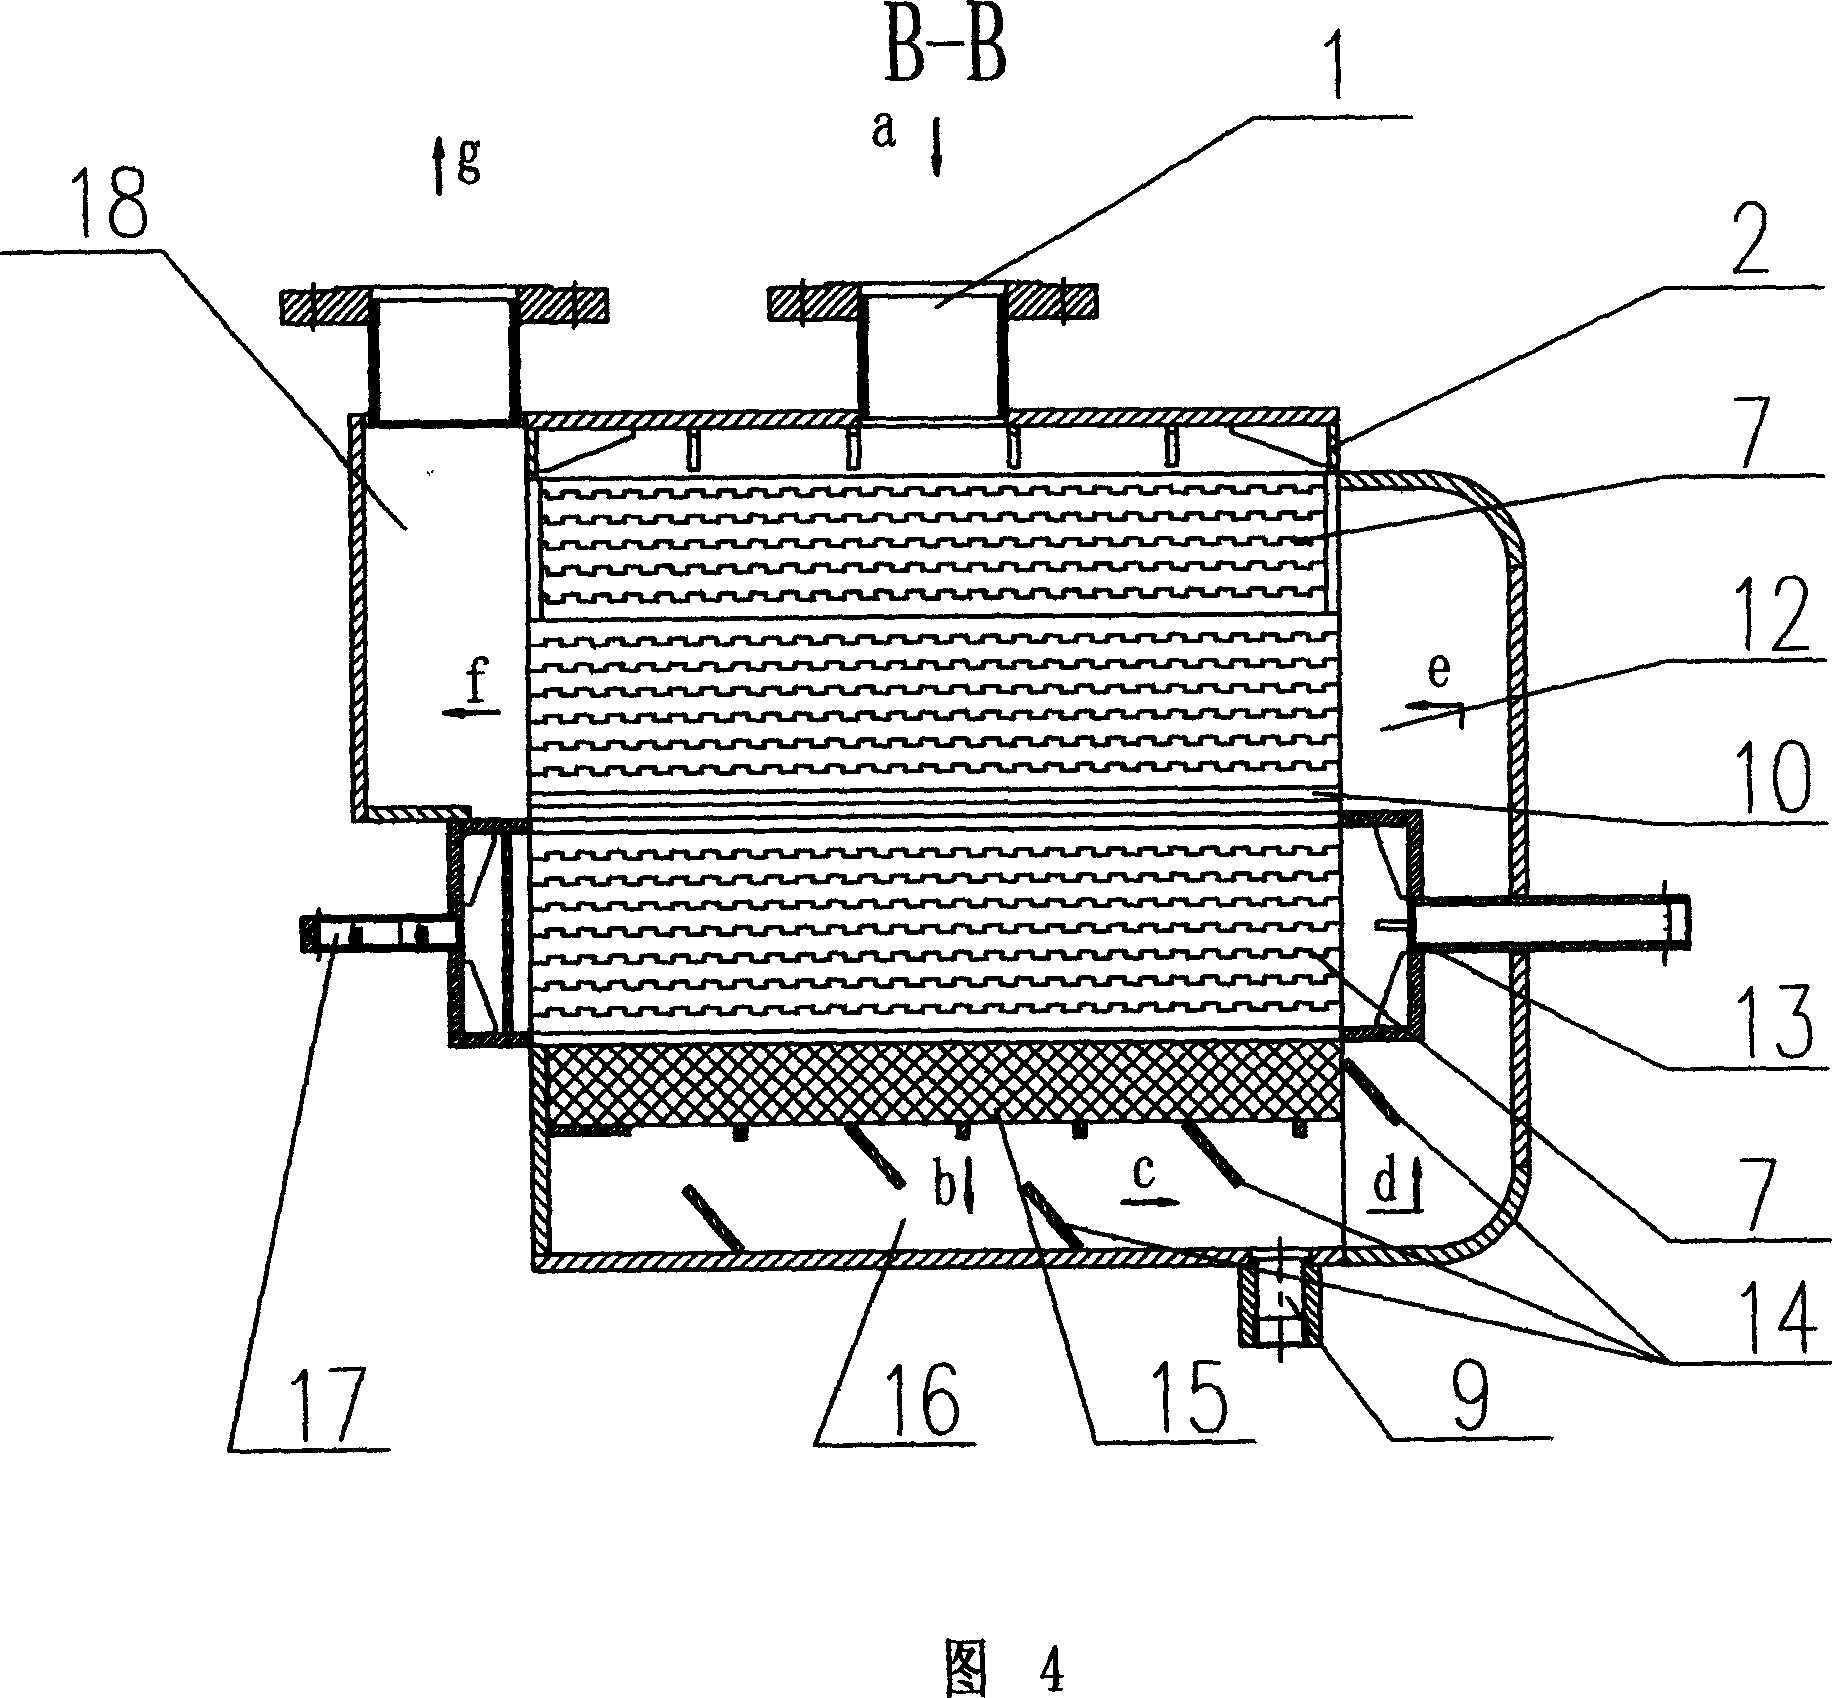 Plate-fin heat exchanger